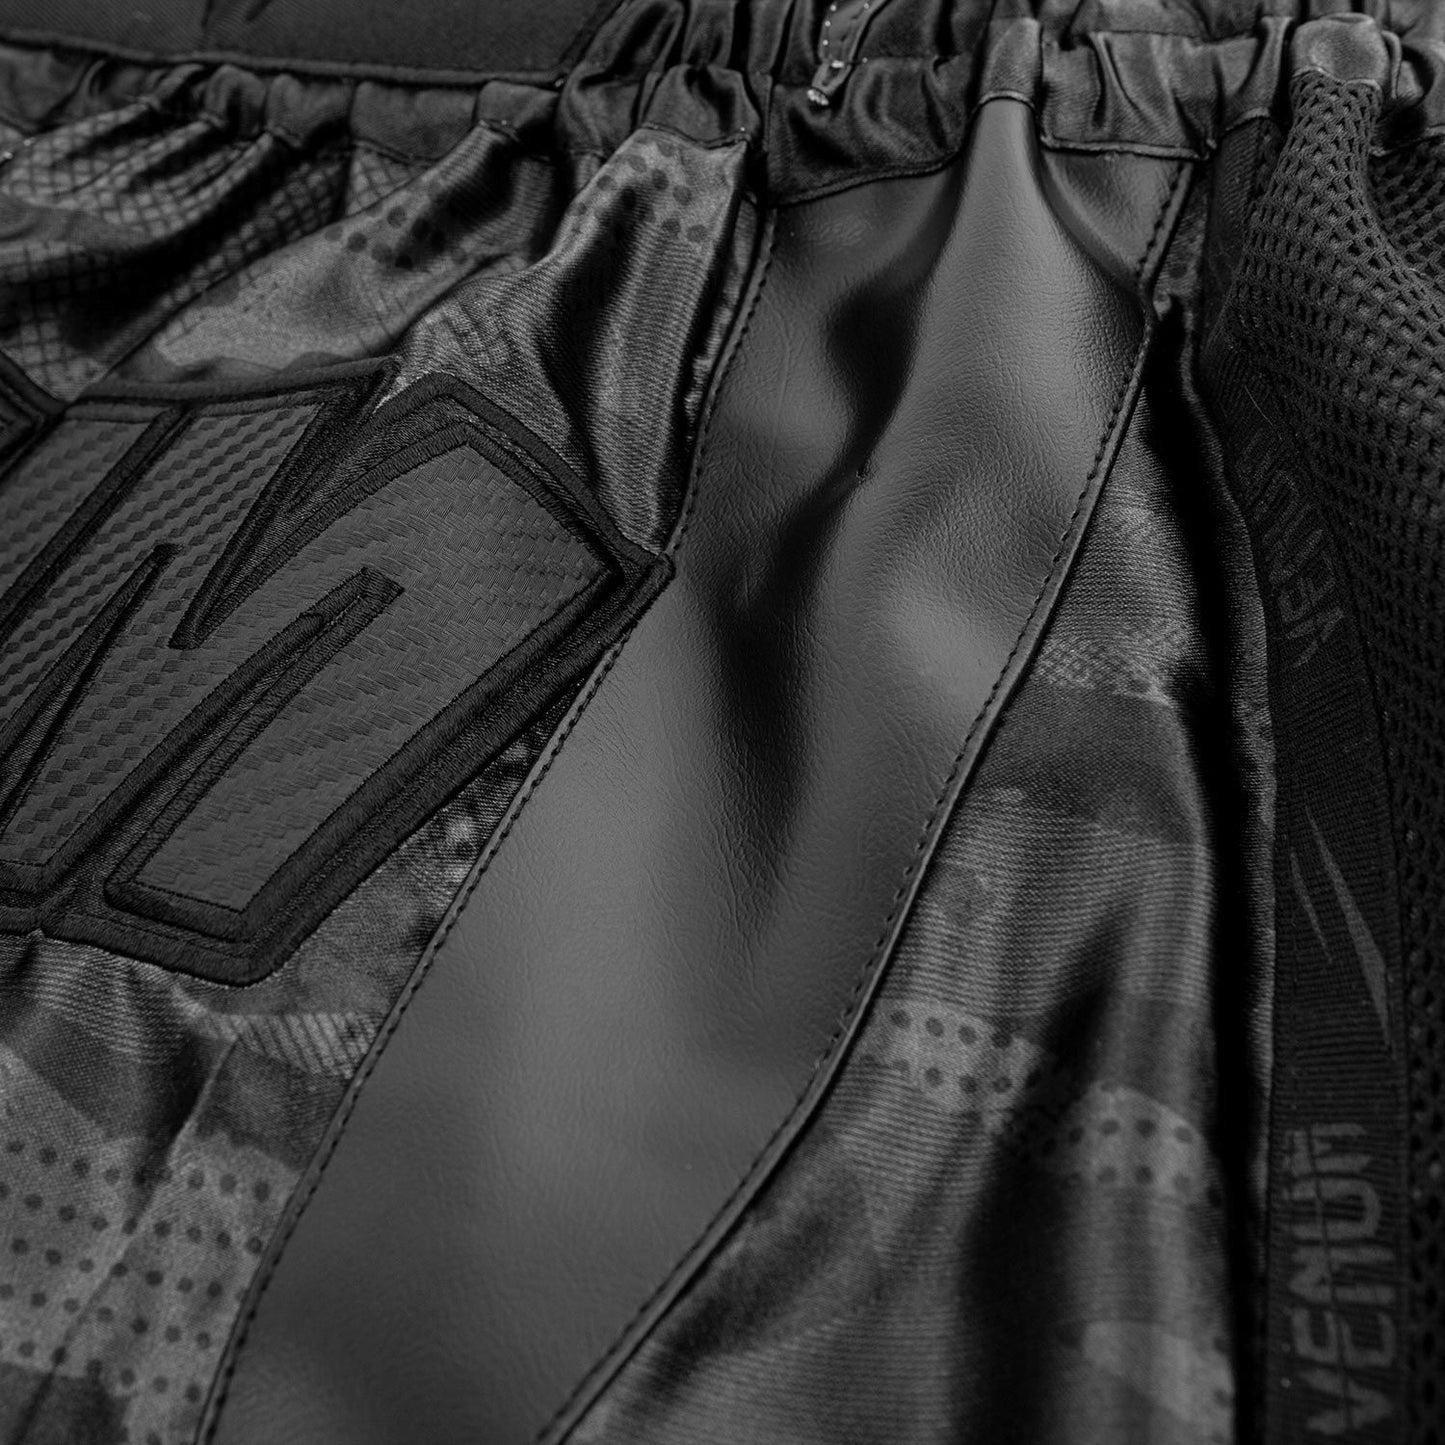 Full Cam Muay Thai Shorts - Urban Camo/Black/Black